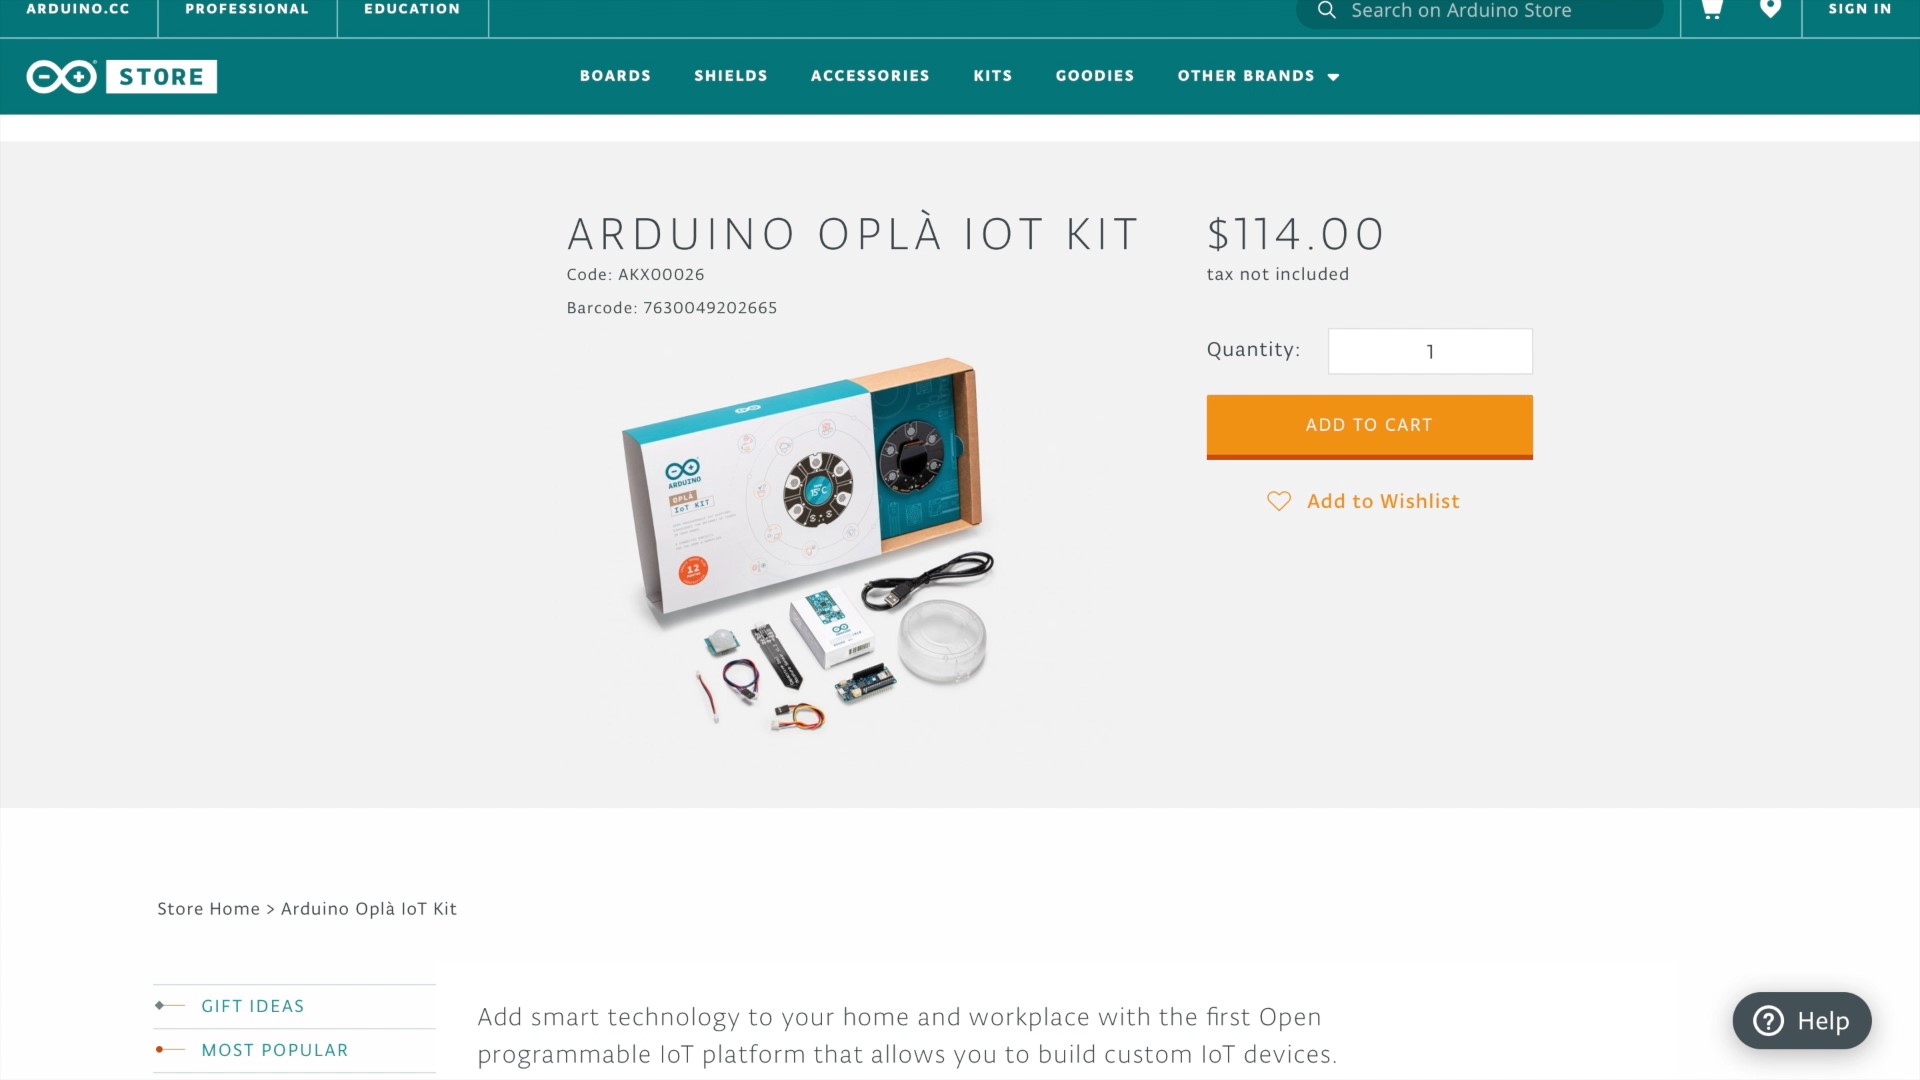 Buy The Arduino Opla IoT Kit